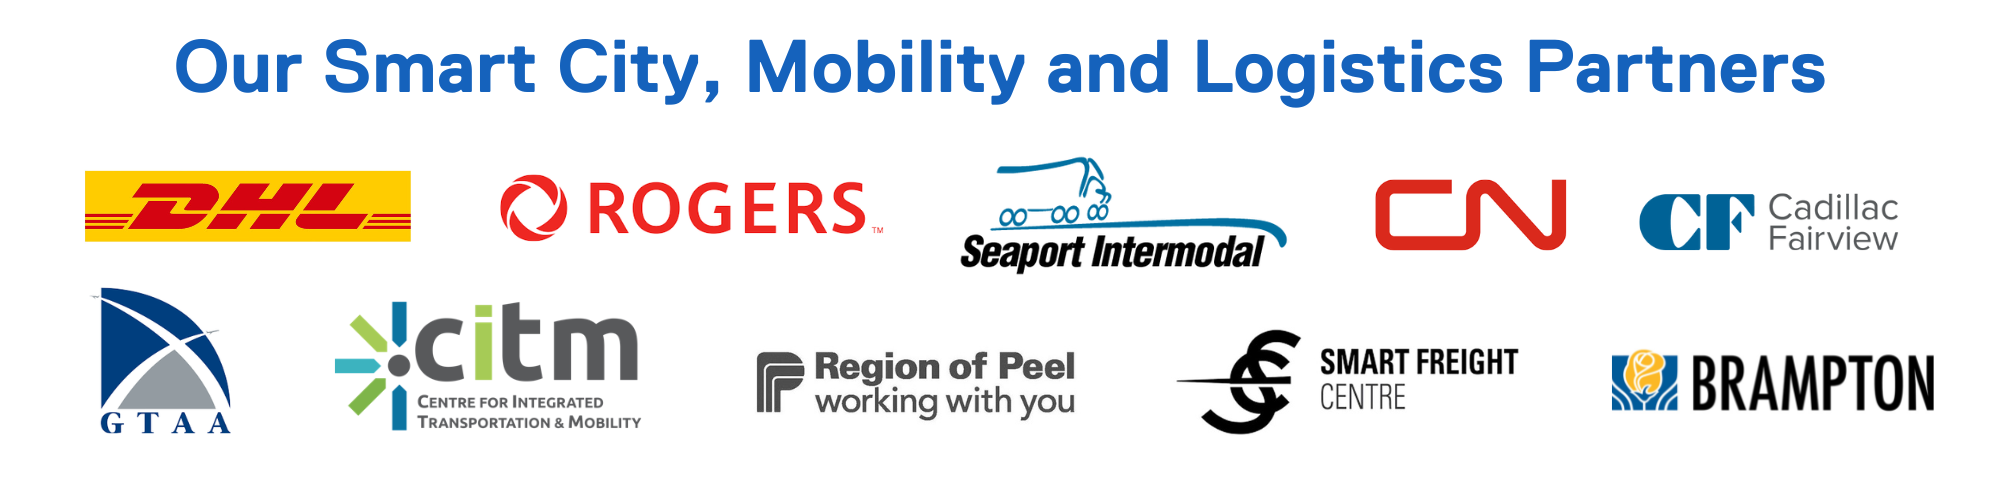 Brampton venture zone smart city, mobility and logistics partners